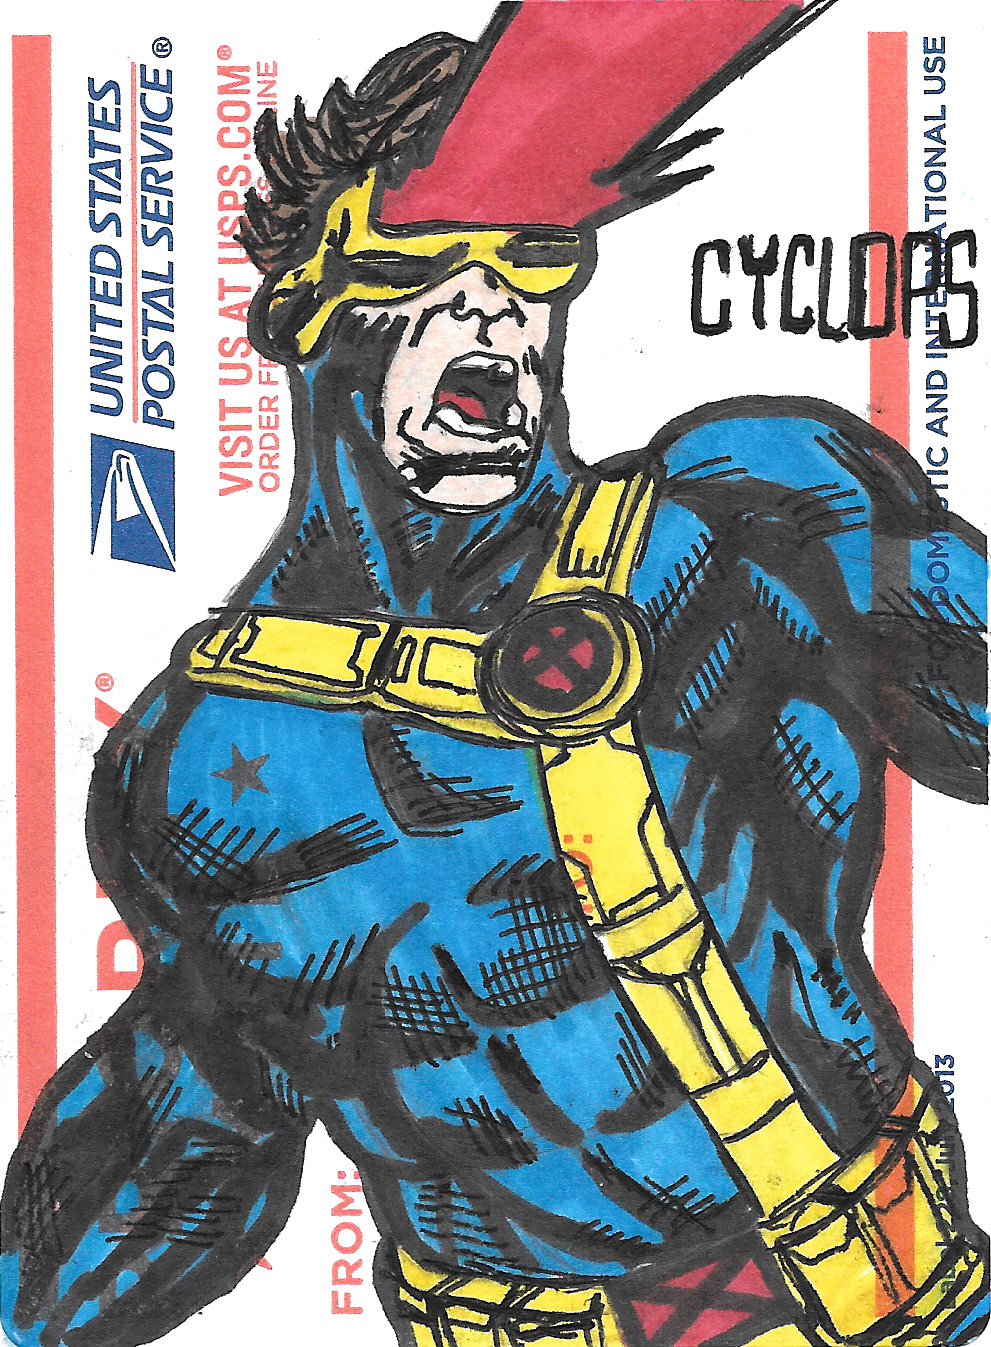 Xmen cartoon hereos villians batman superman cyclops